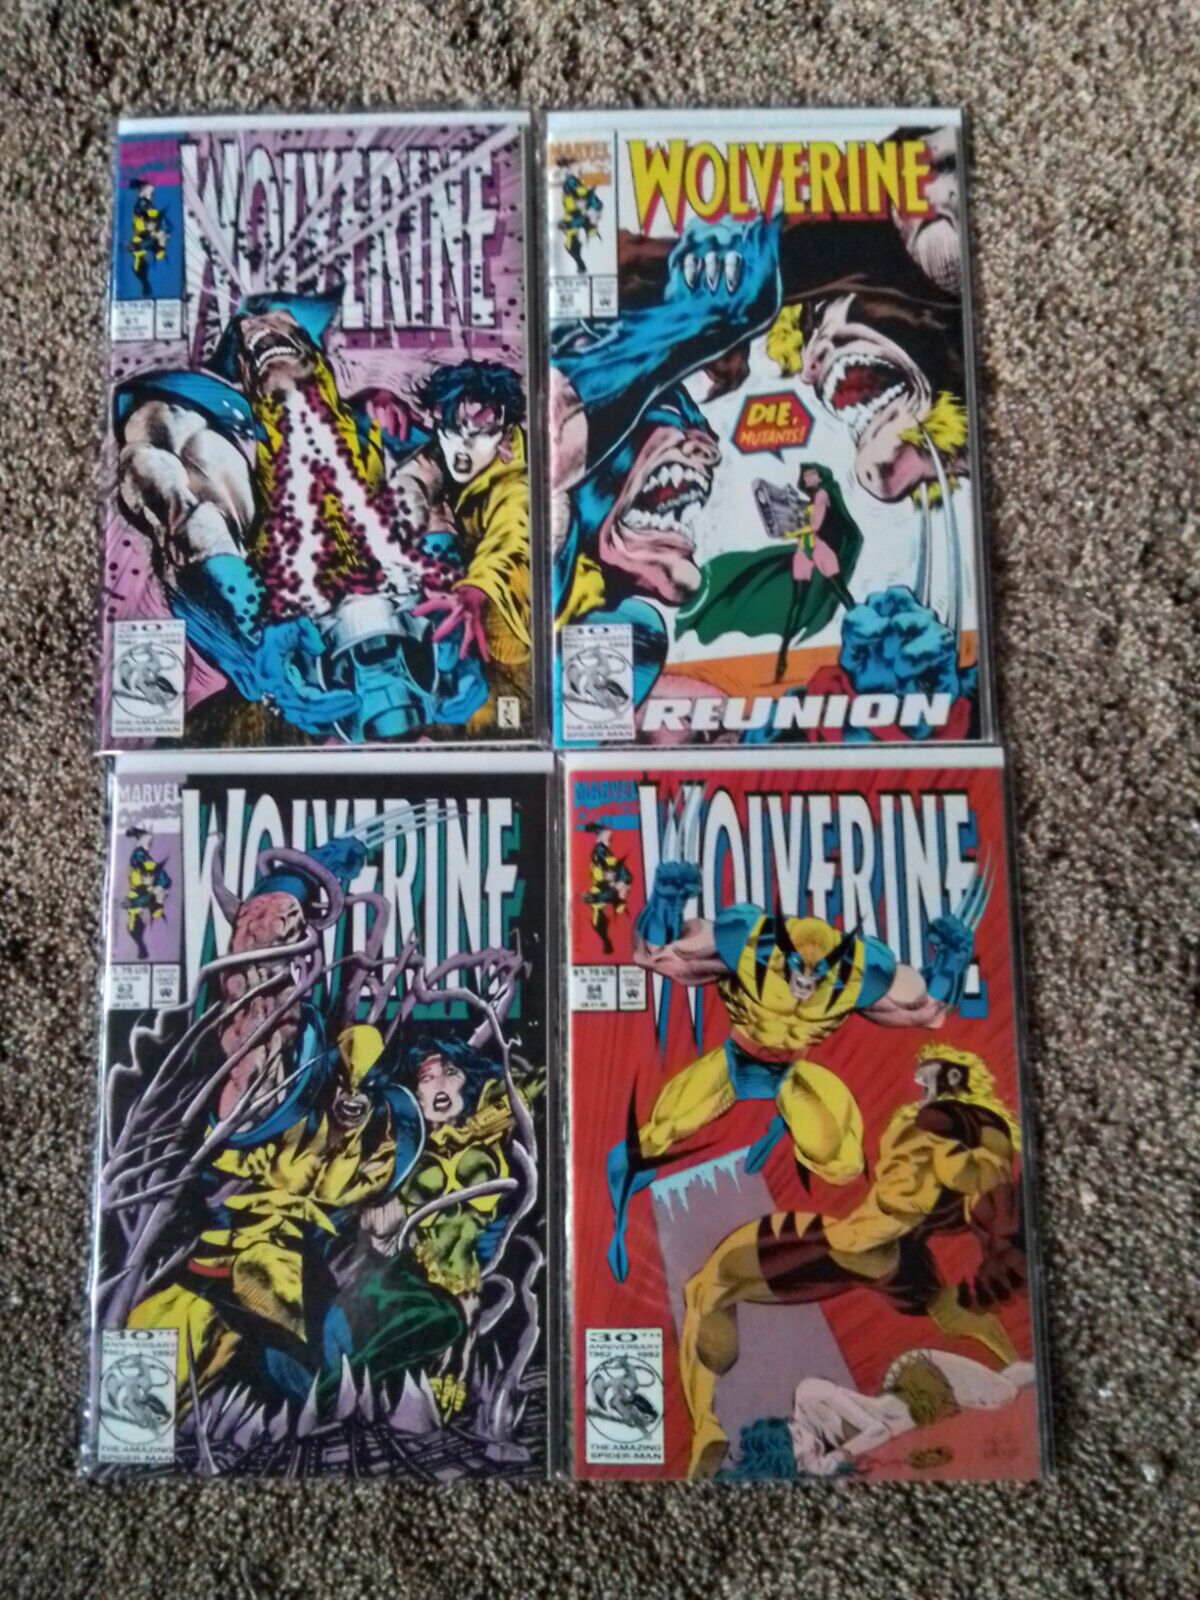 FOUR 1992 MARVEL COMICS "WOLVERINE" VINTAGE COMIC BOOKS ISSUES # 61, 62, 63,& 64